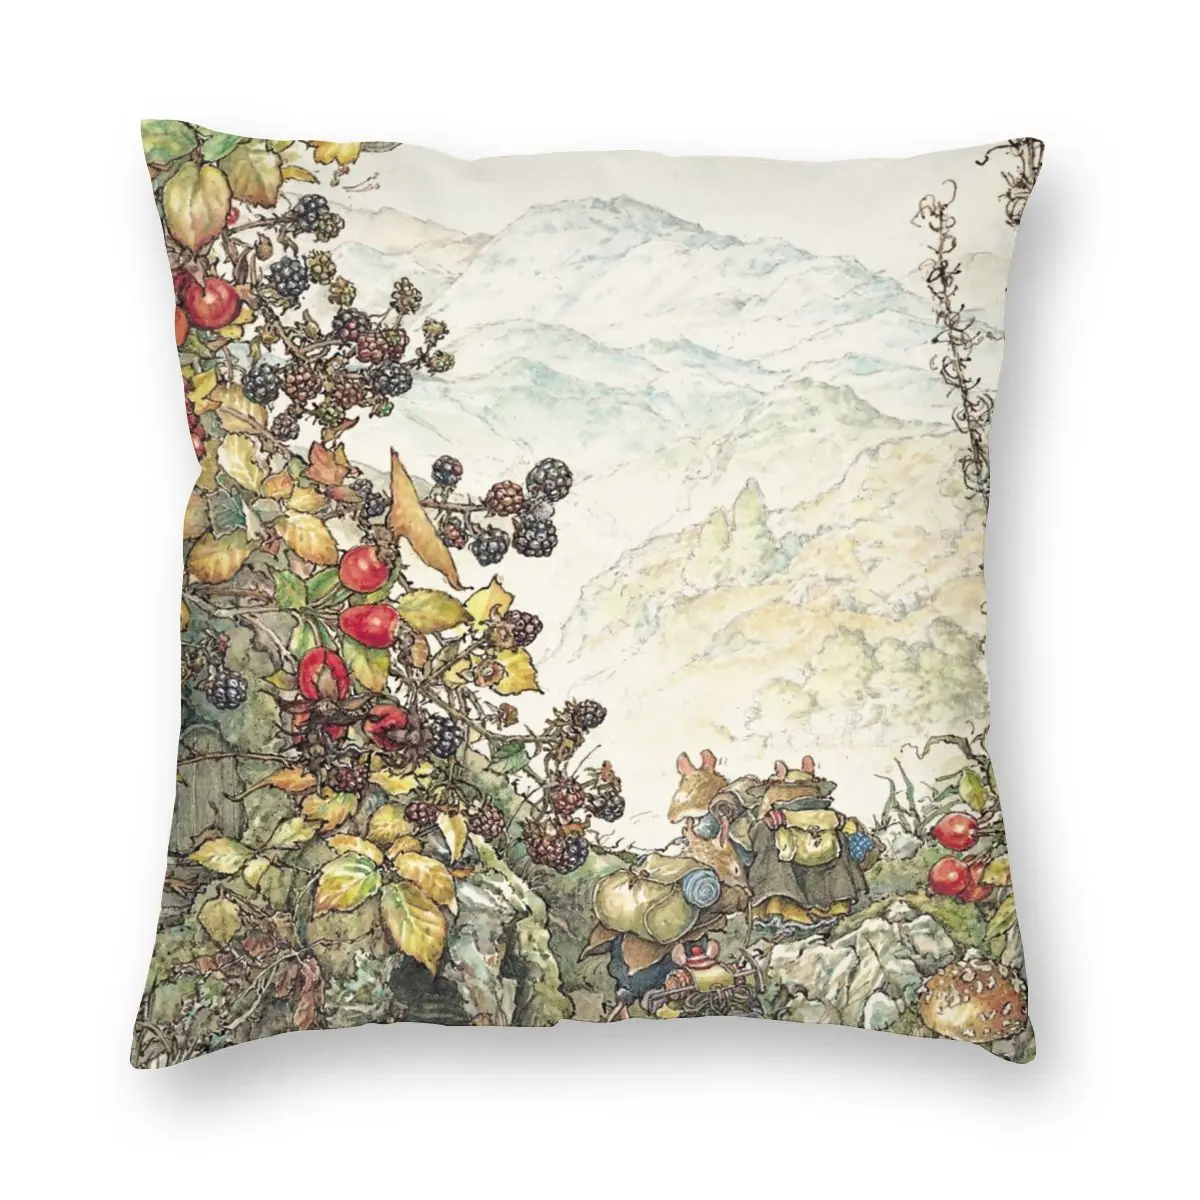 Walk To The High Hills Mole Pillowcase Printing Fabric Cushion Cover Decor Autumn Throw Pillow Case Cover Home Zippered 40*40cm